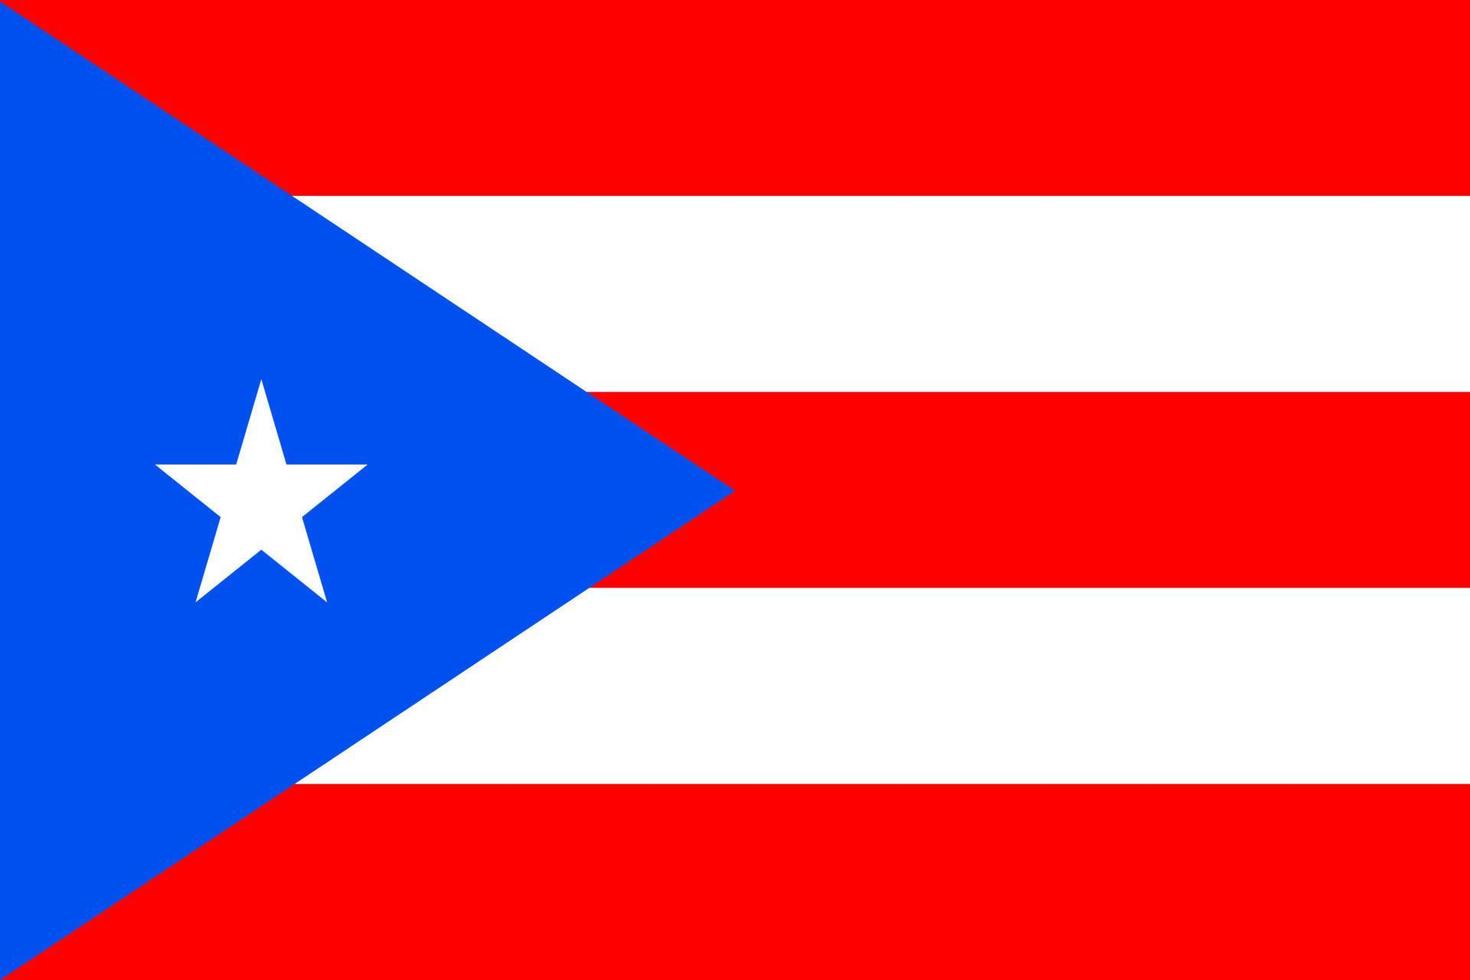 Peurto Rica national flag Illustration vector